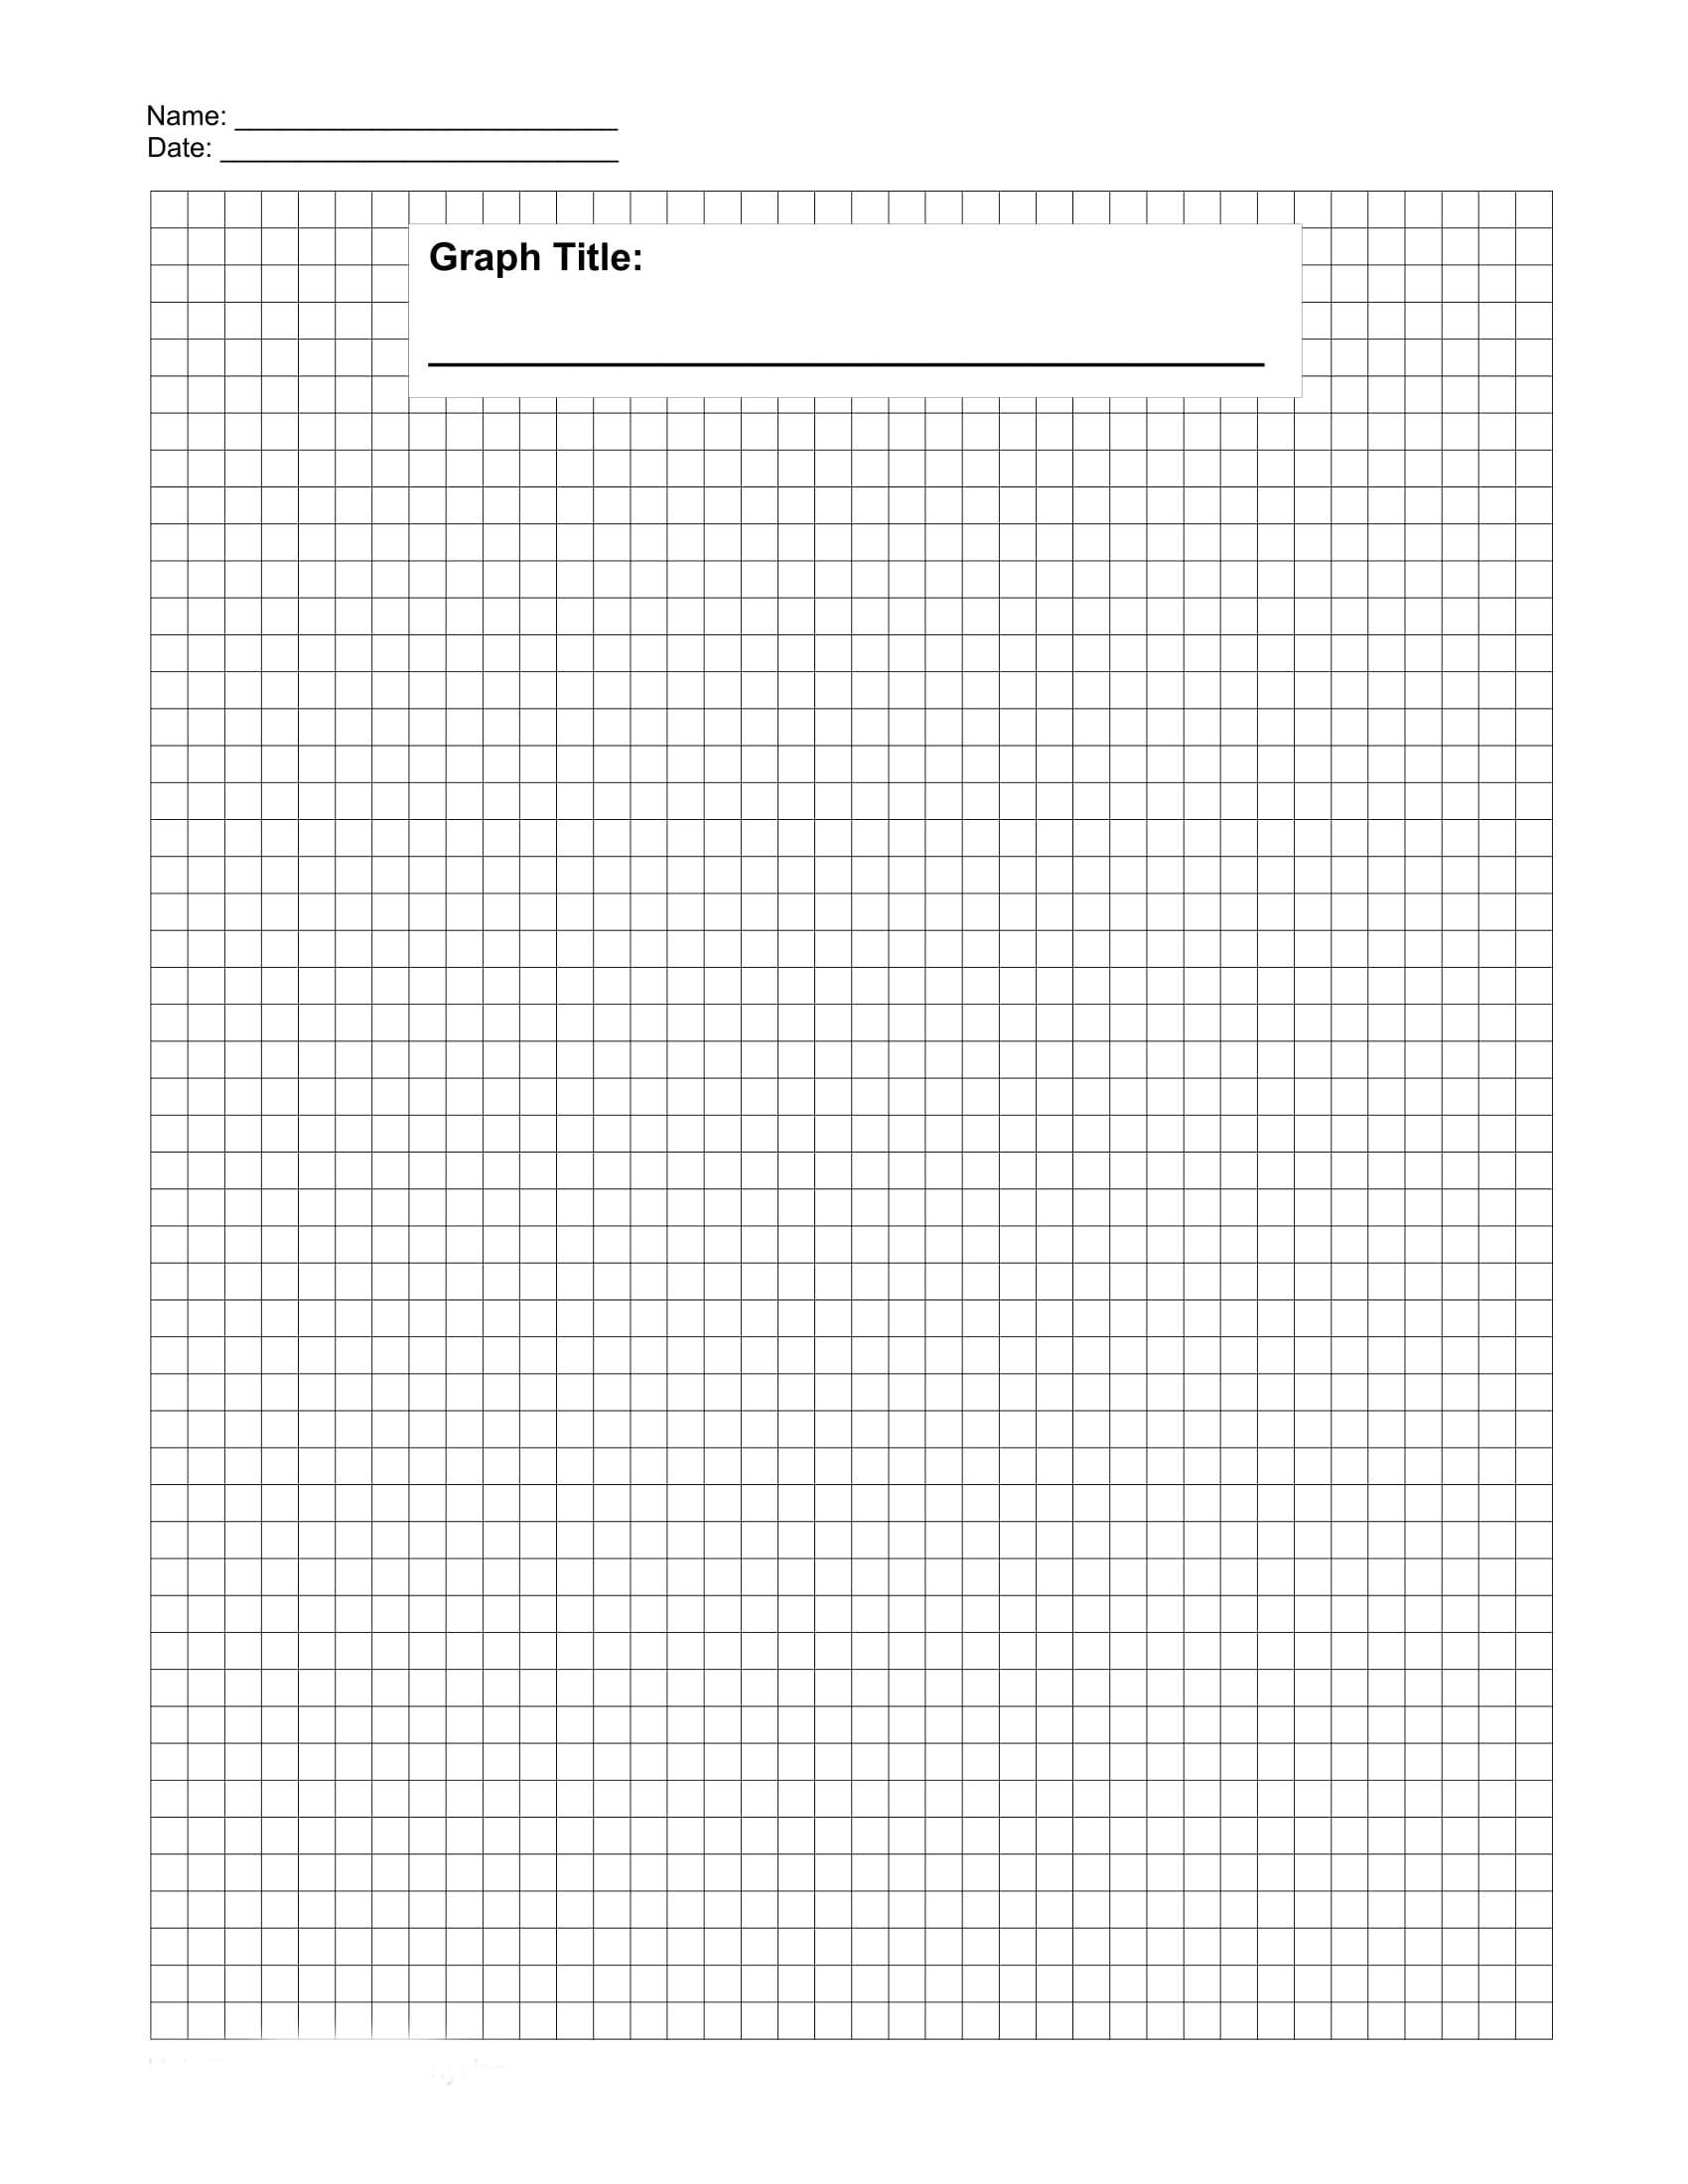 33 Free Printable Graph Paper Templates (Word, Pdf) - Free Template inside Blank Picture Graph Template